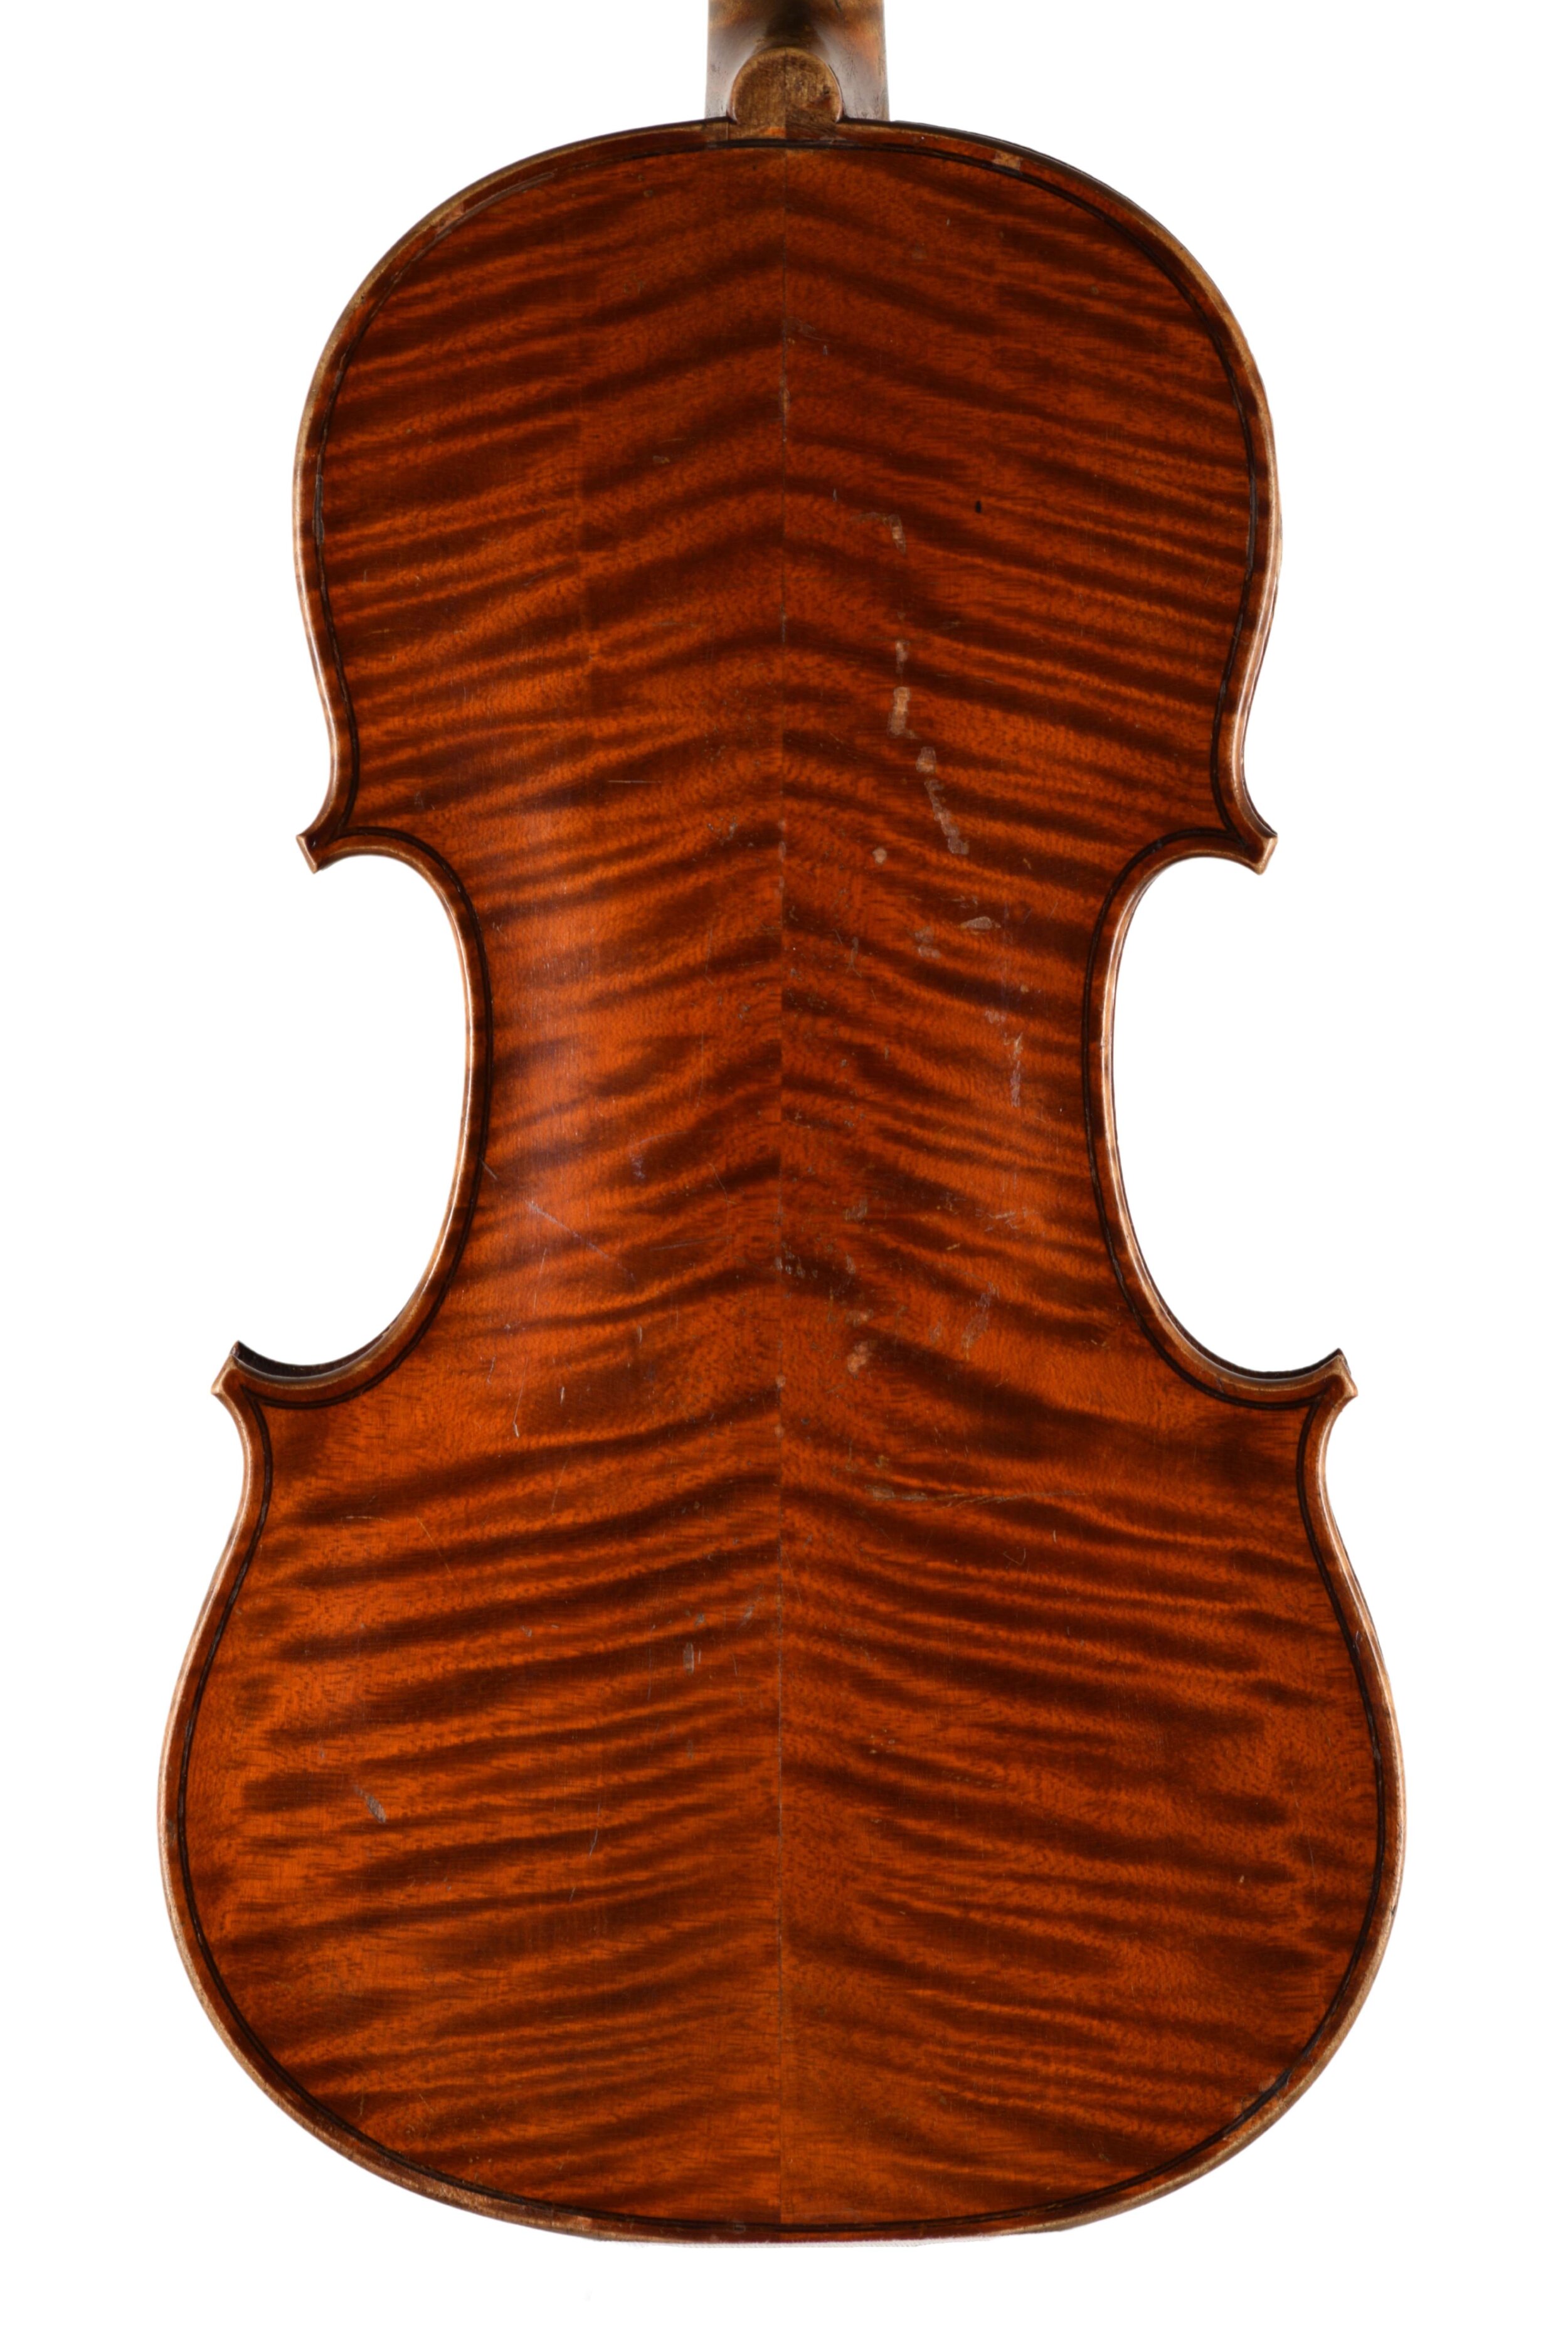 Mirecourt antique viola back